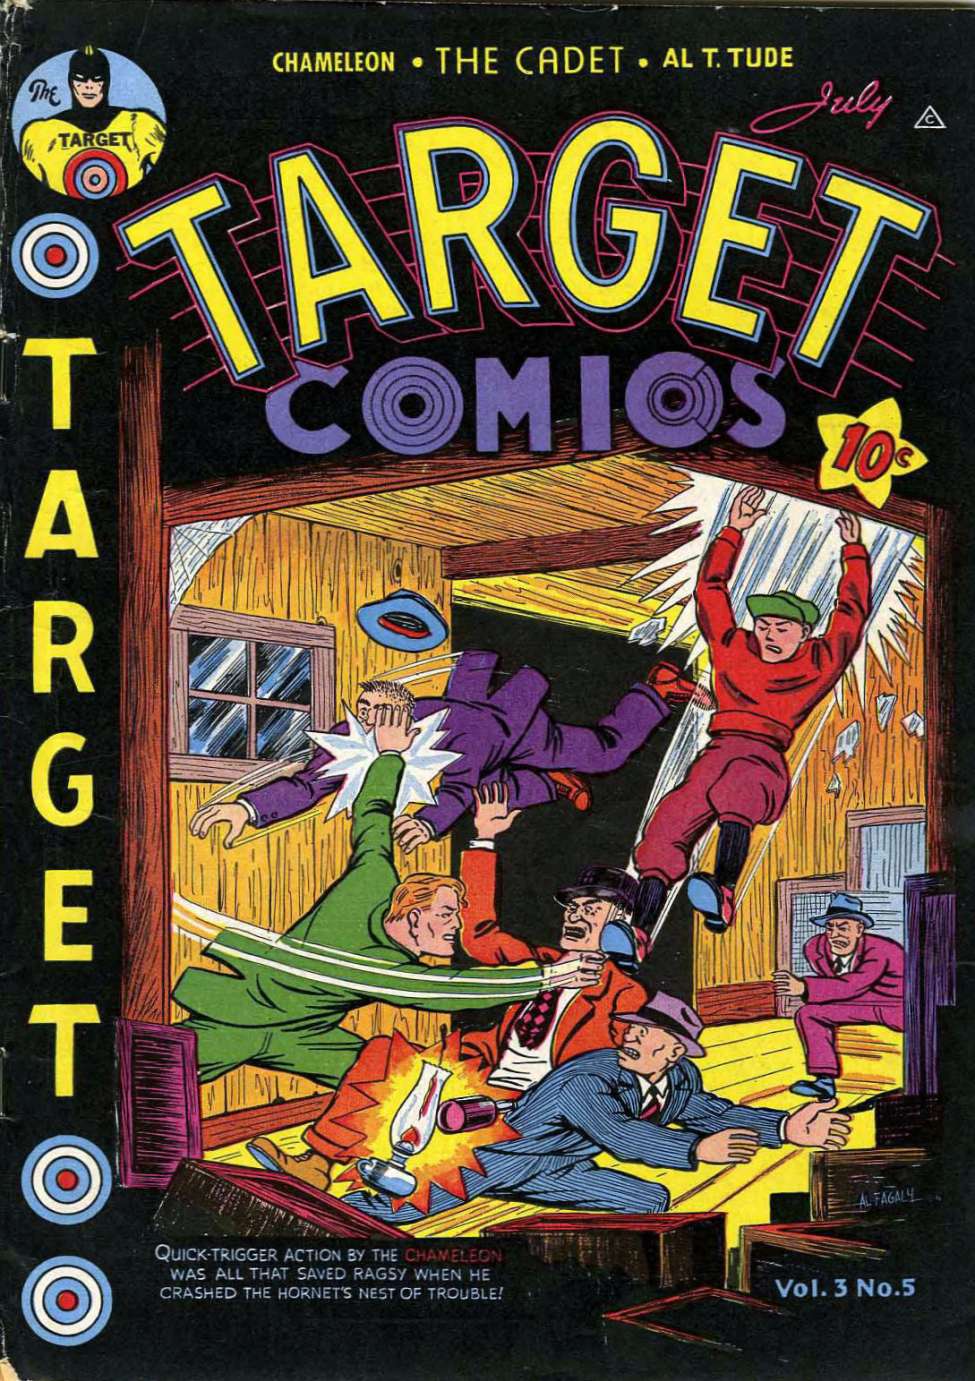 Comic Book Cover For Target Comics v3 5